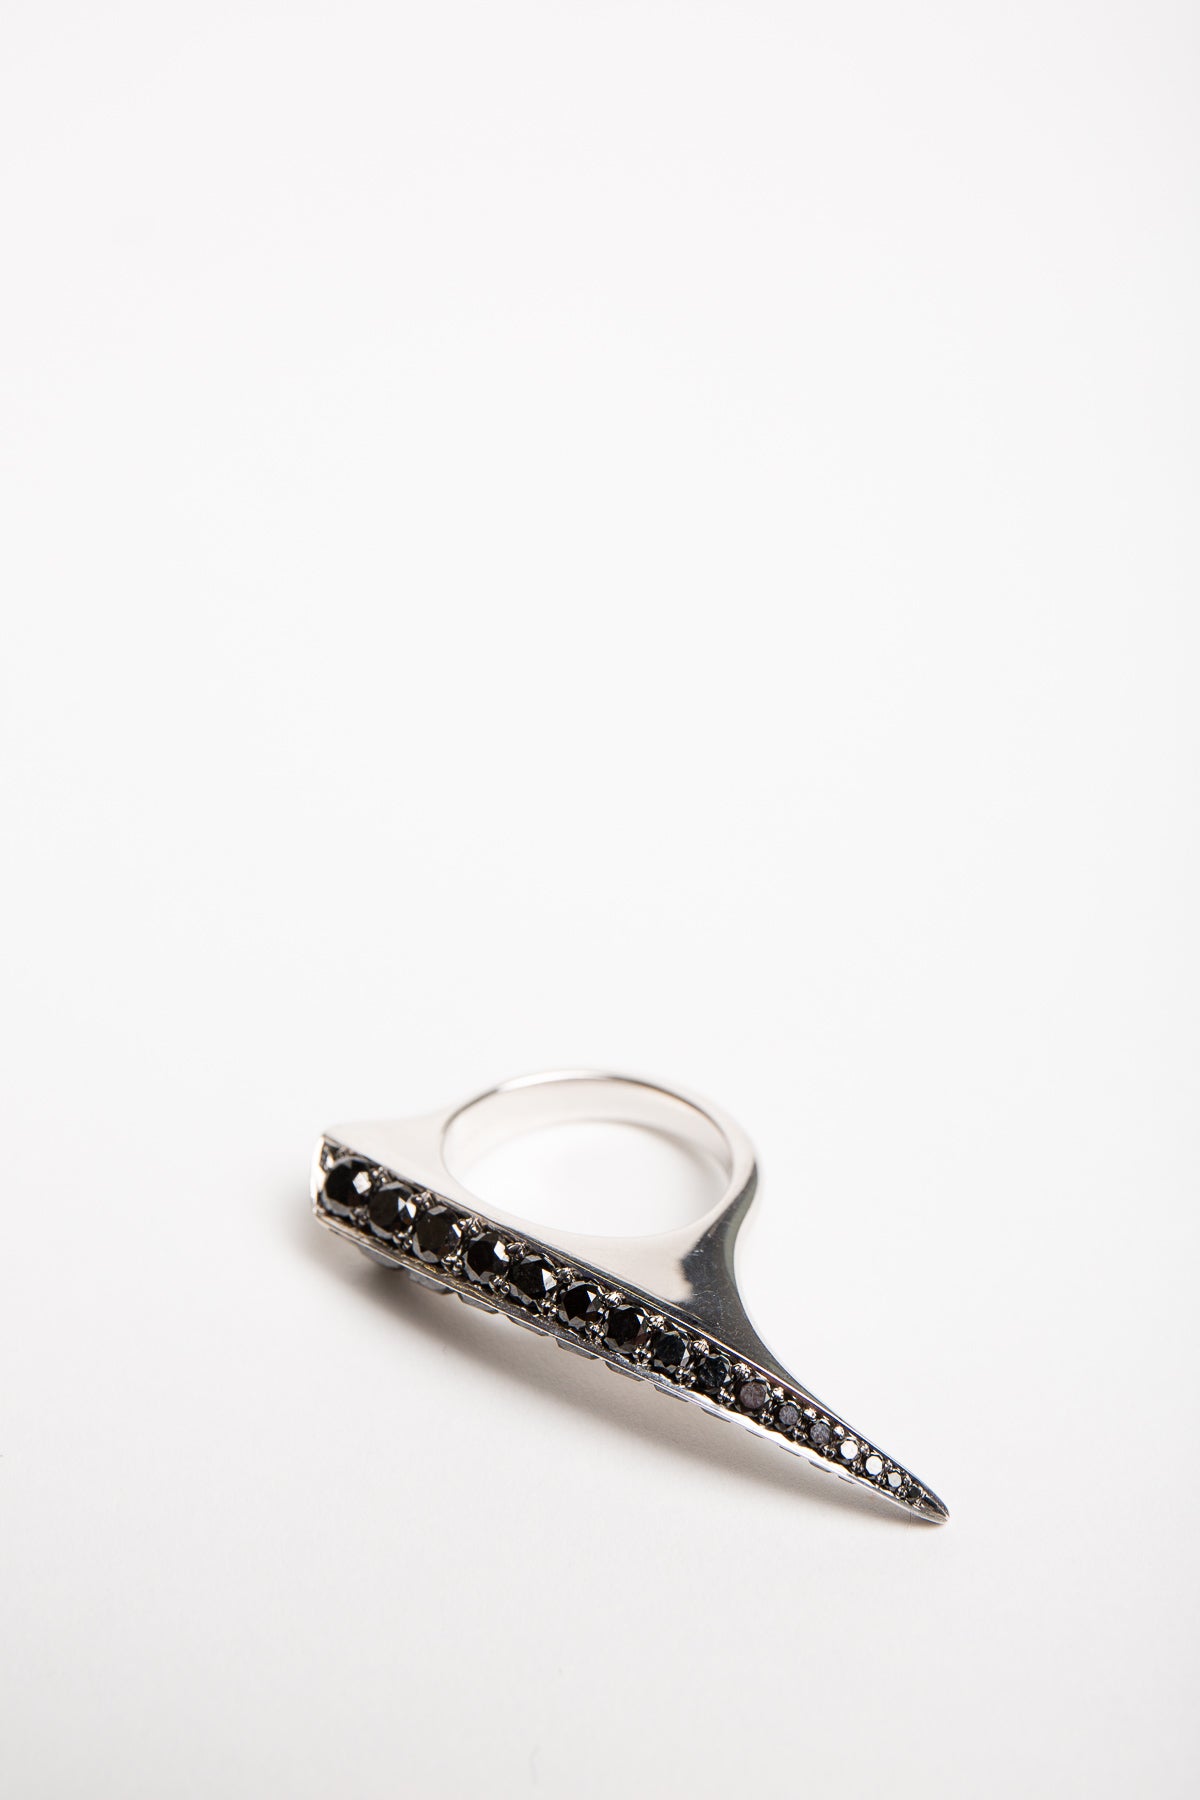 SHAUN LEANE | BLACK DIAMOND SABRE RING